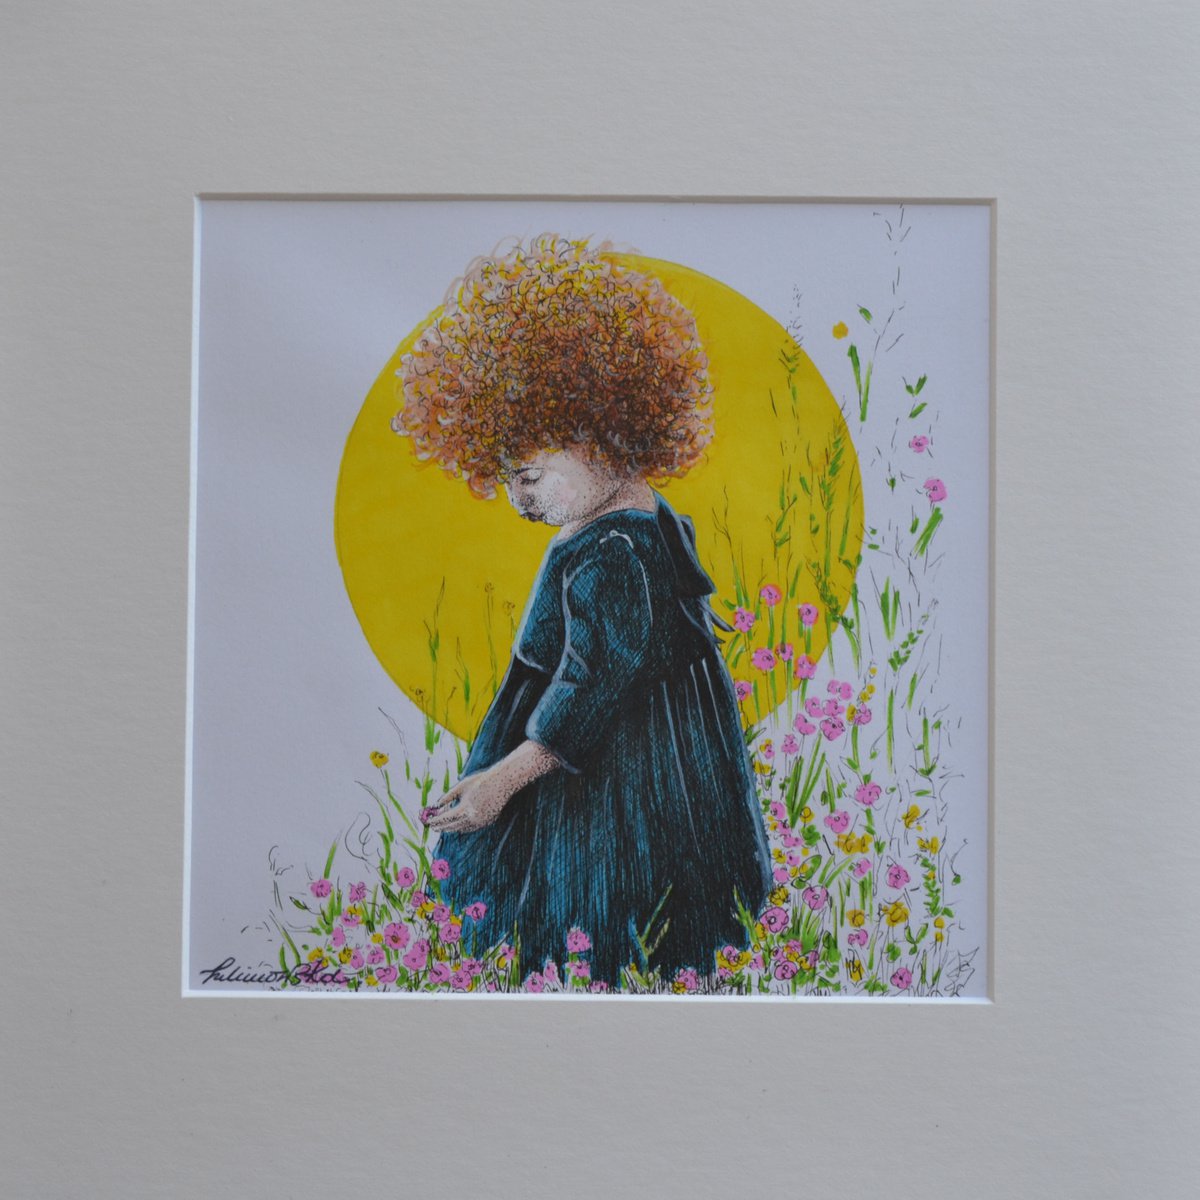 The girl on a sunny meadow by Maja Tulimowska - Chmielewska